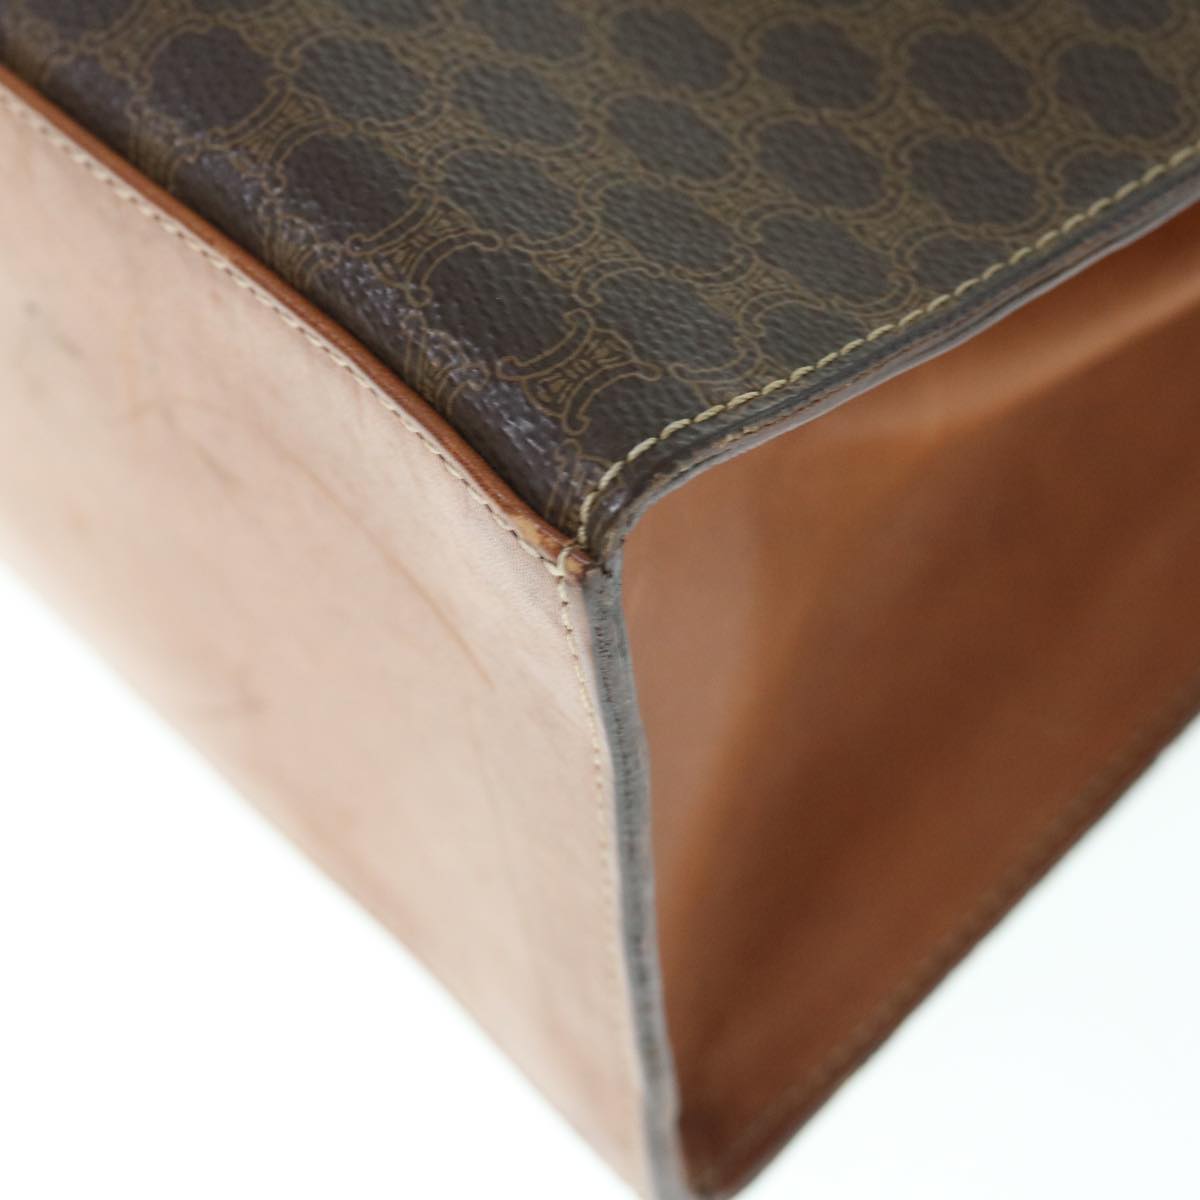 CELINE Macadam Canvas Hand Bag PVC Leather Brown Auth 63166